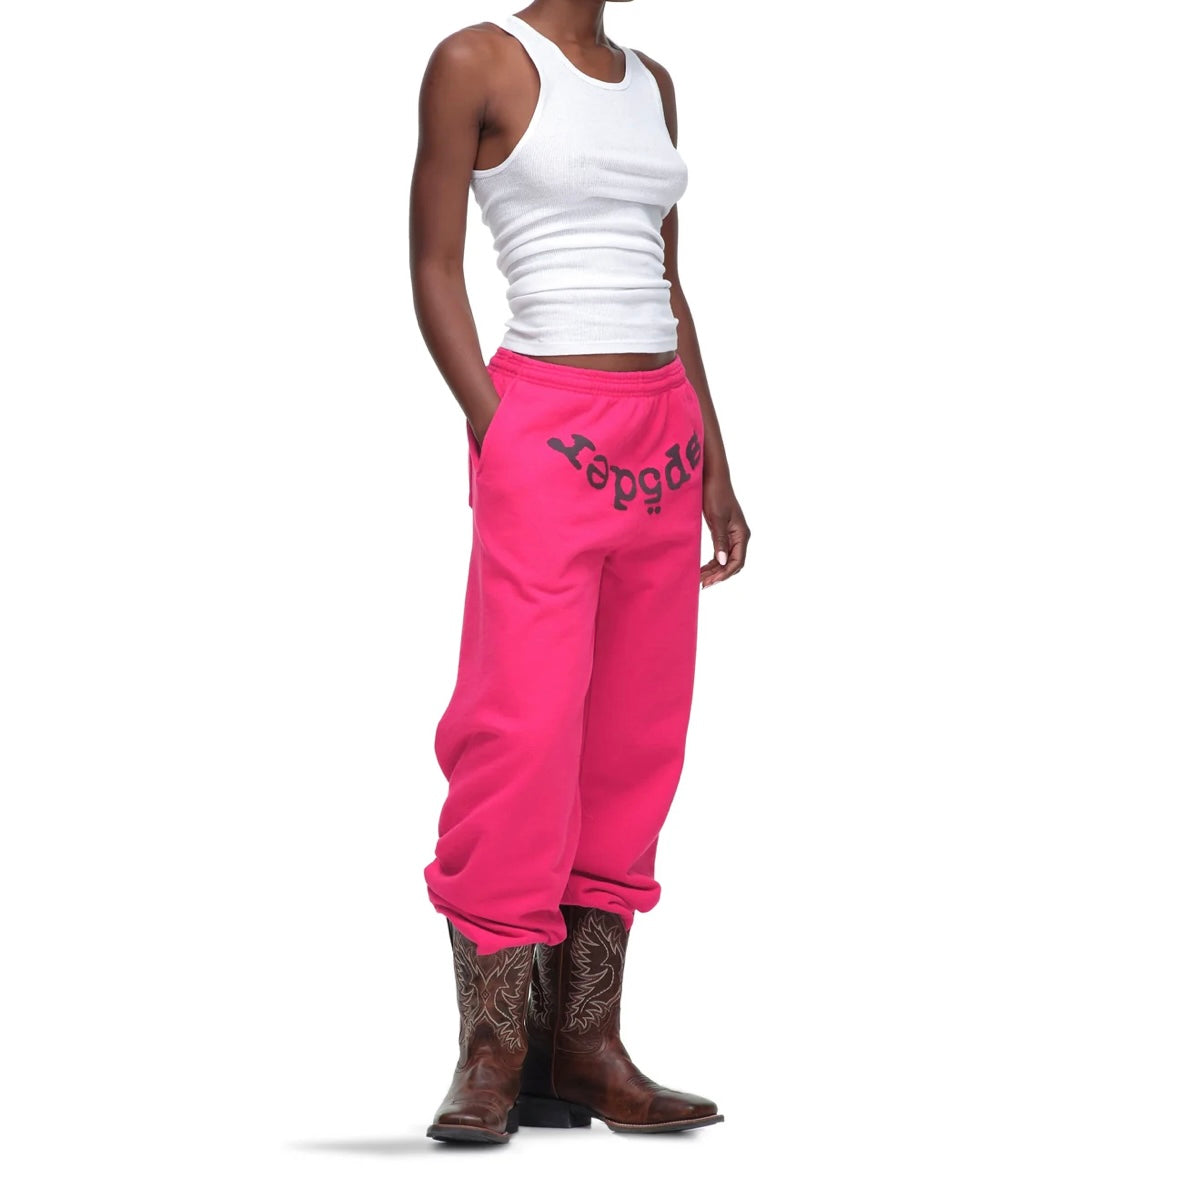 Sp5der Pink Black Legacy Sweatpants On Body Female